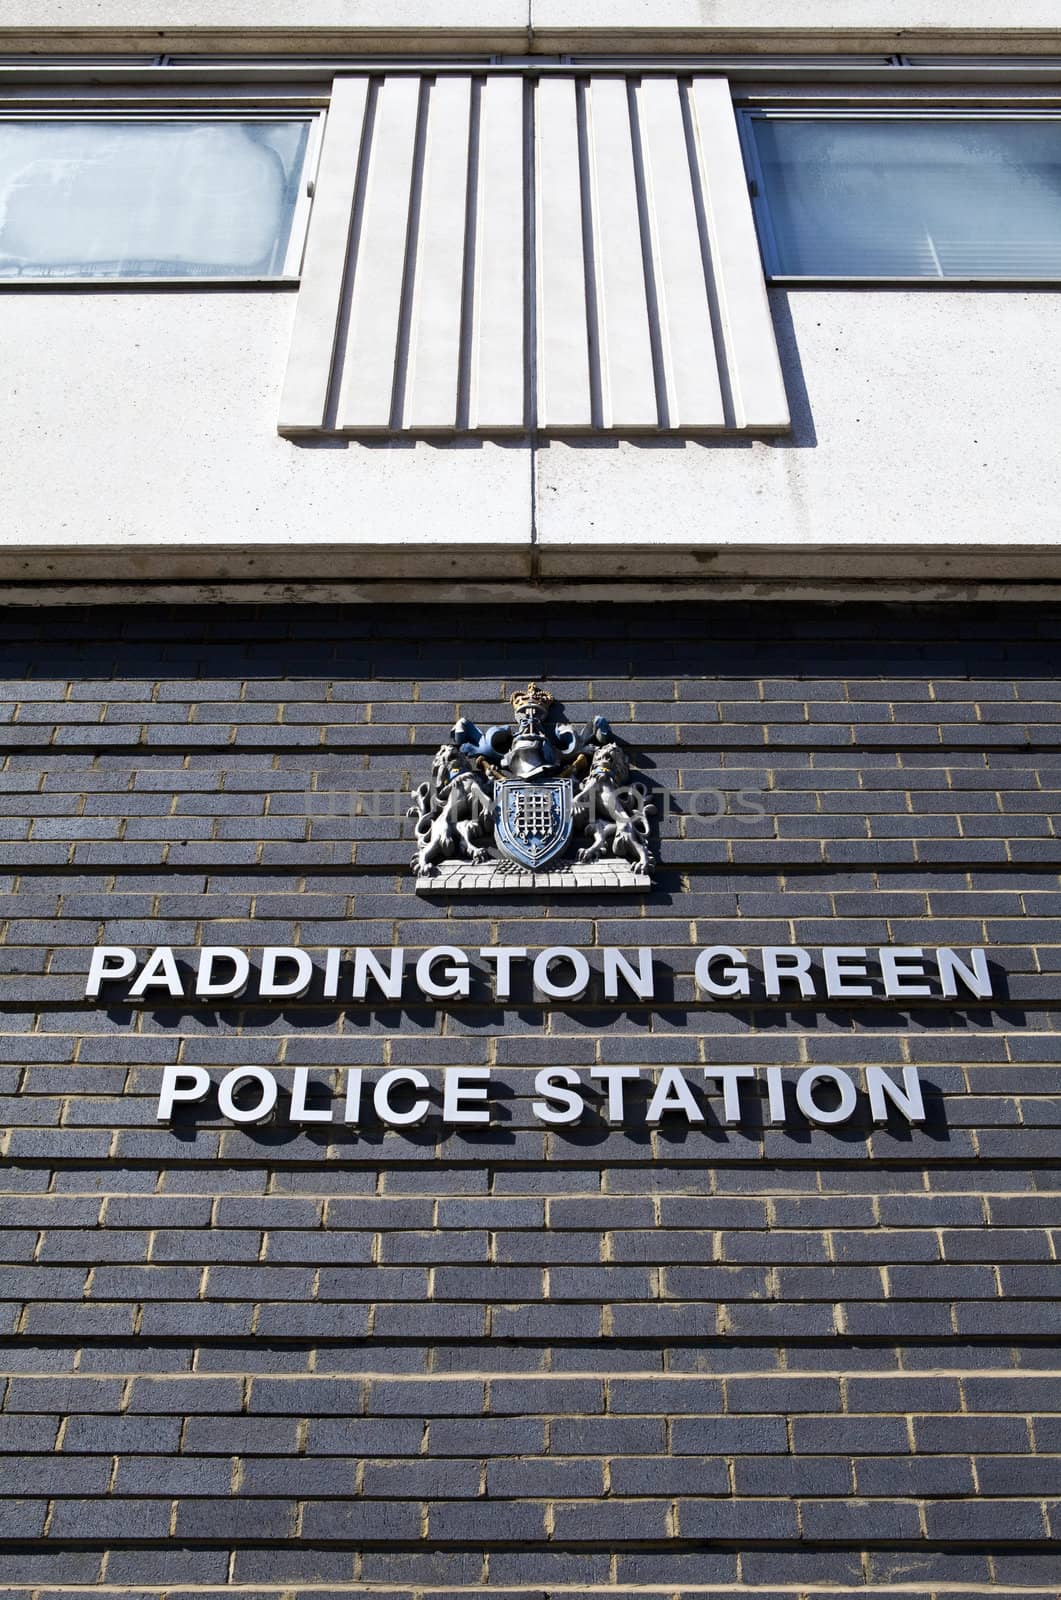 Paddington Green Police Station by chrisdorney